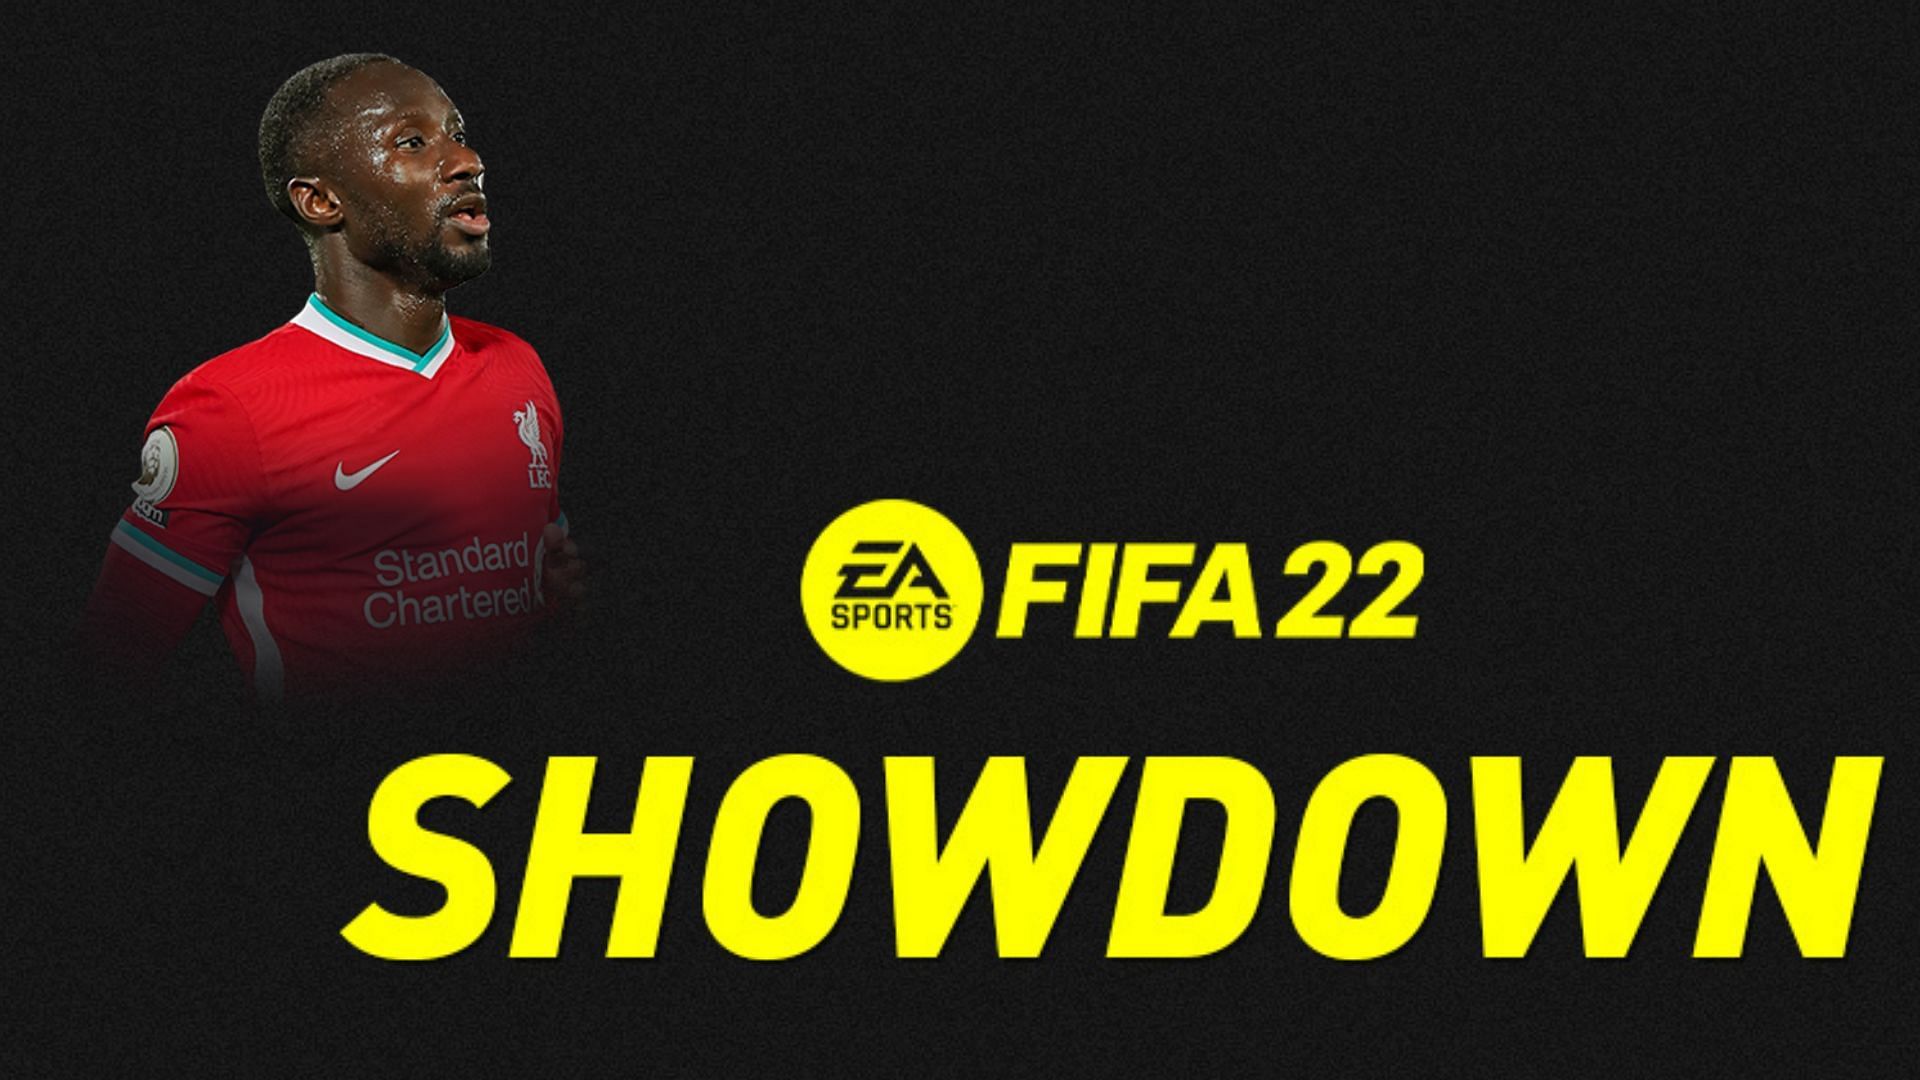 Naby Keita Showdown SBC is now live in FIFA 22 (Image via Sportskeeda)